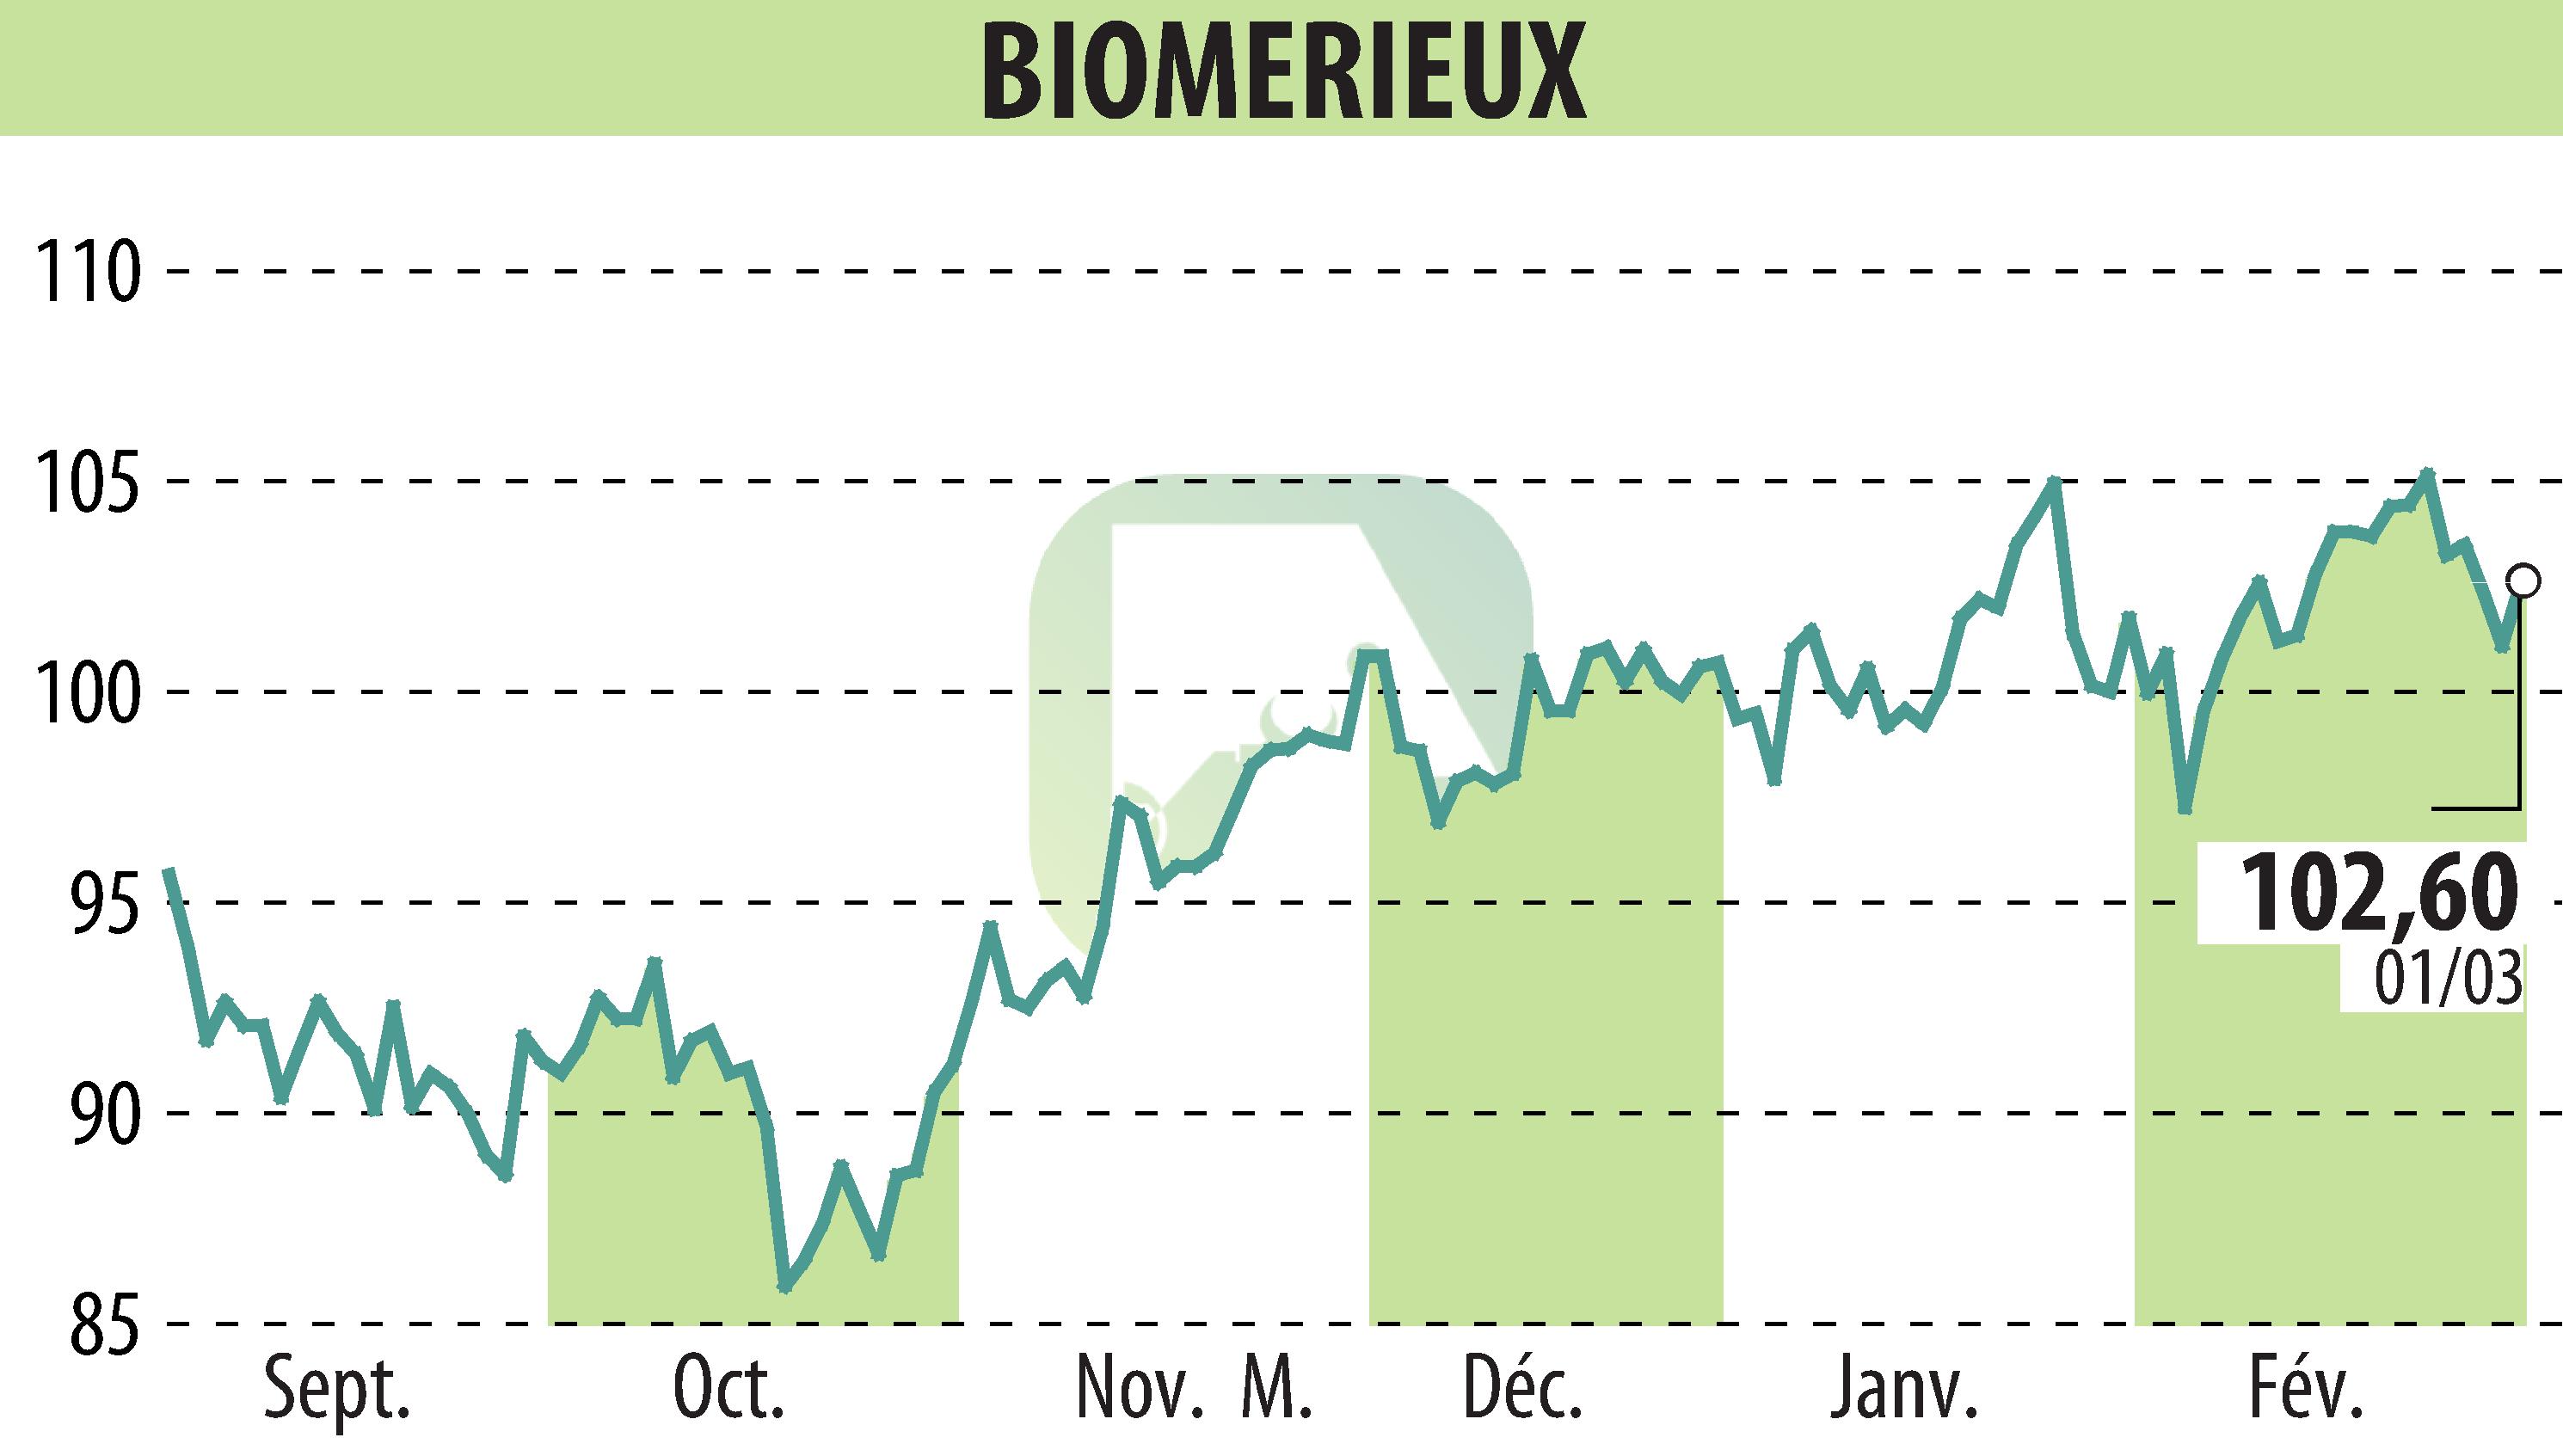 Stock price chart of BIOMERIEUX (EPA:BIM) showing fluctuations